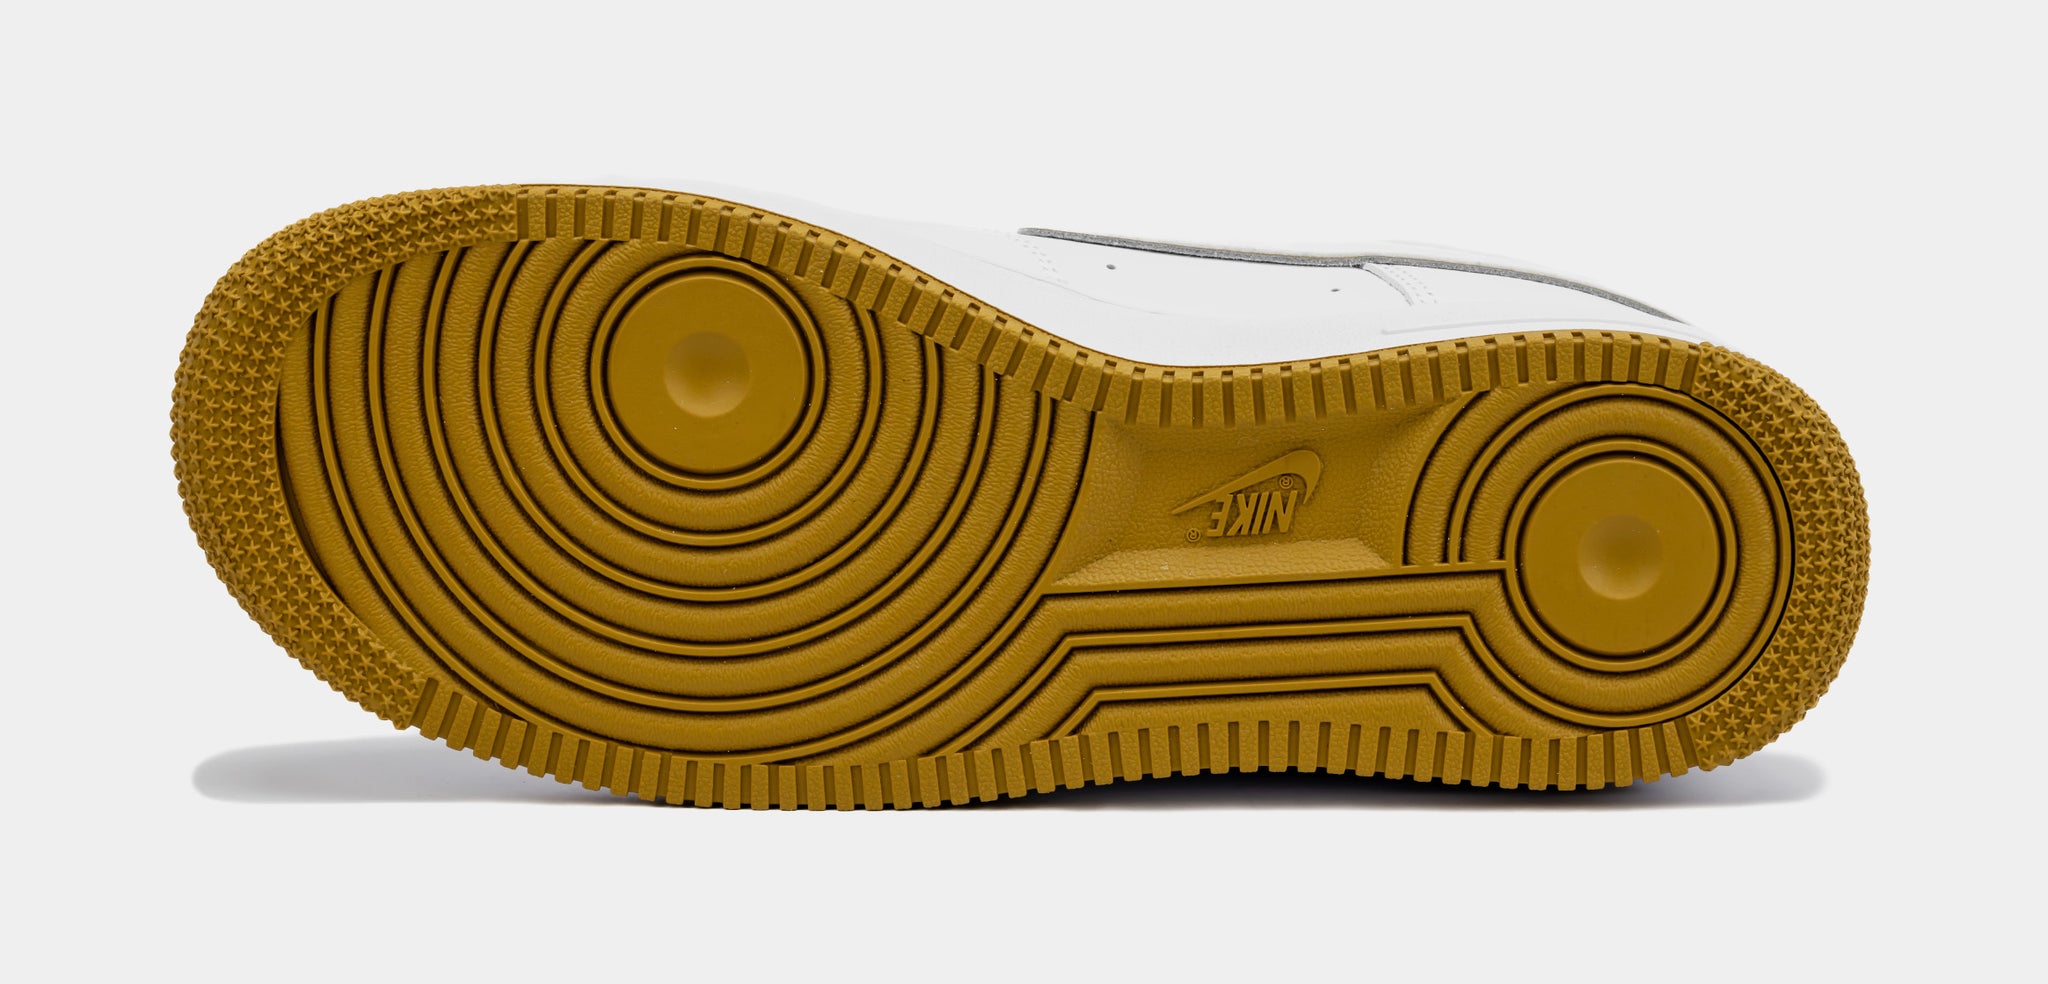 Nike Air Force 1 LV8 Grade School Lifestyle Shoe White Gold DM3322